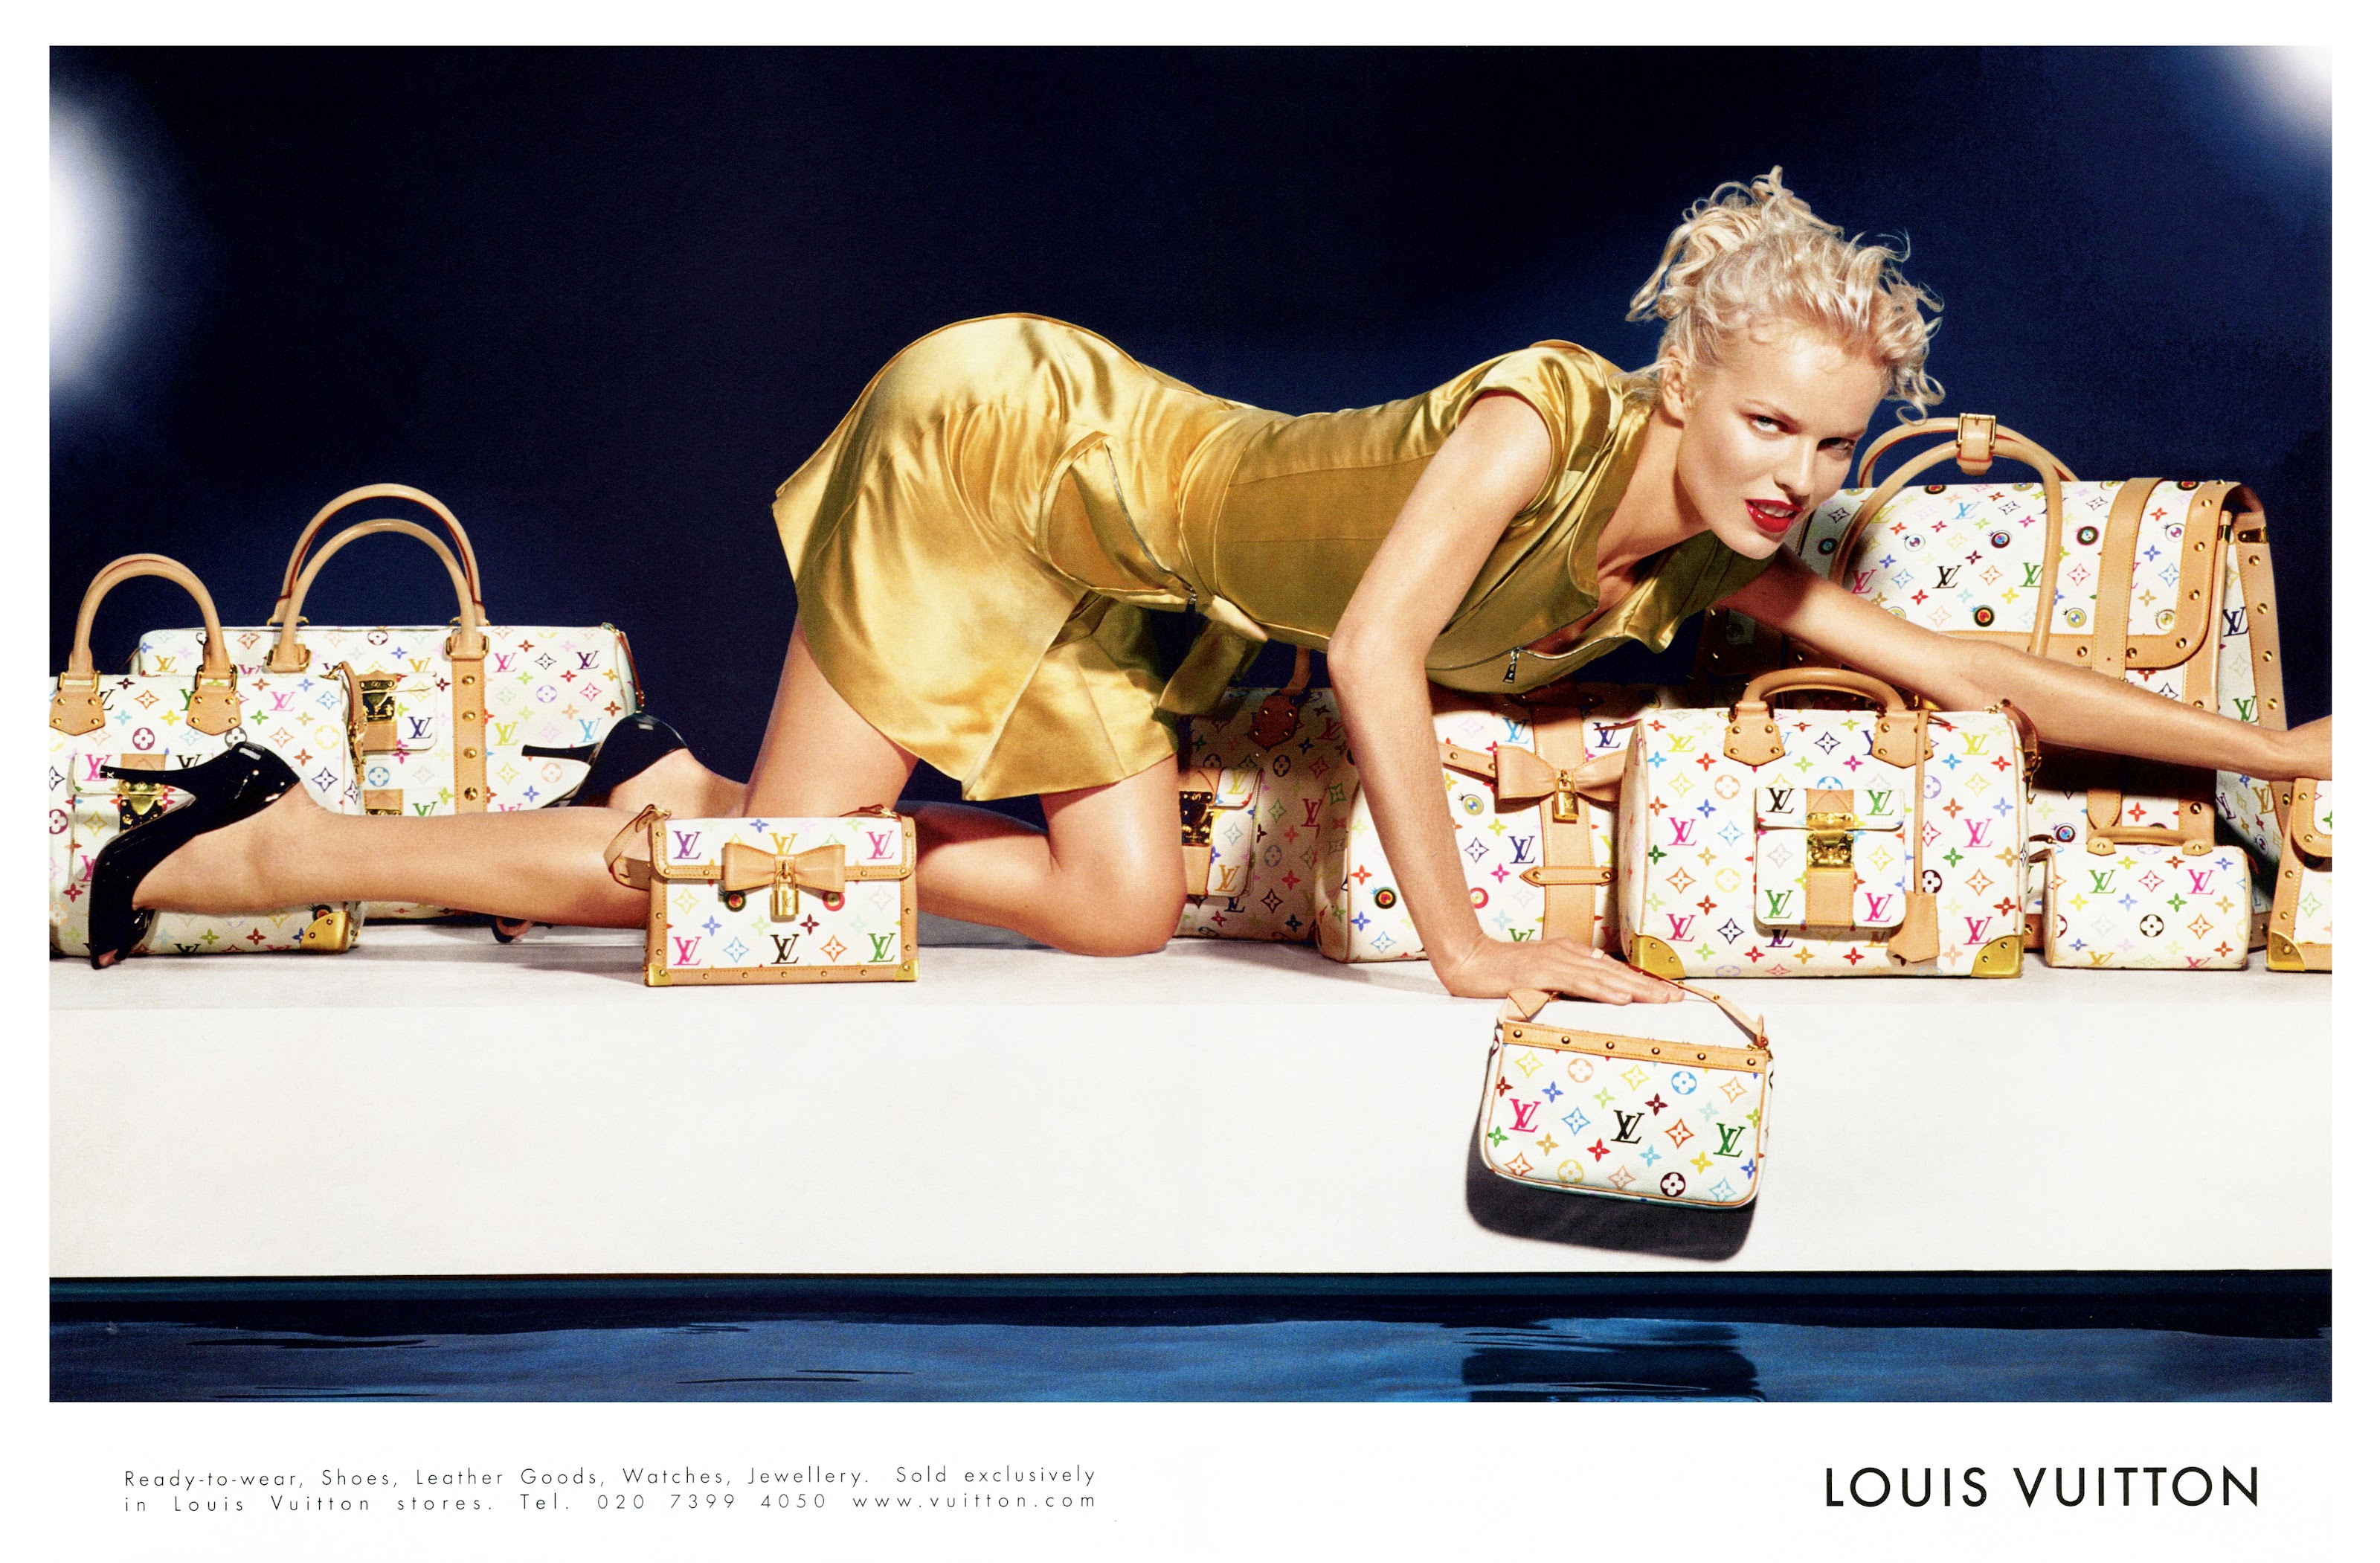 Louis Vuitton - Catalog - September 2003